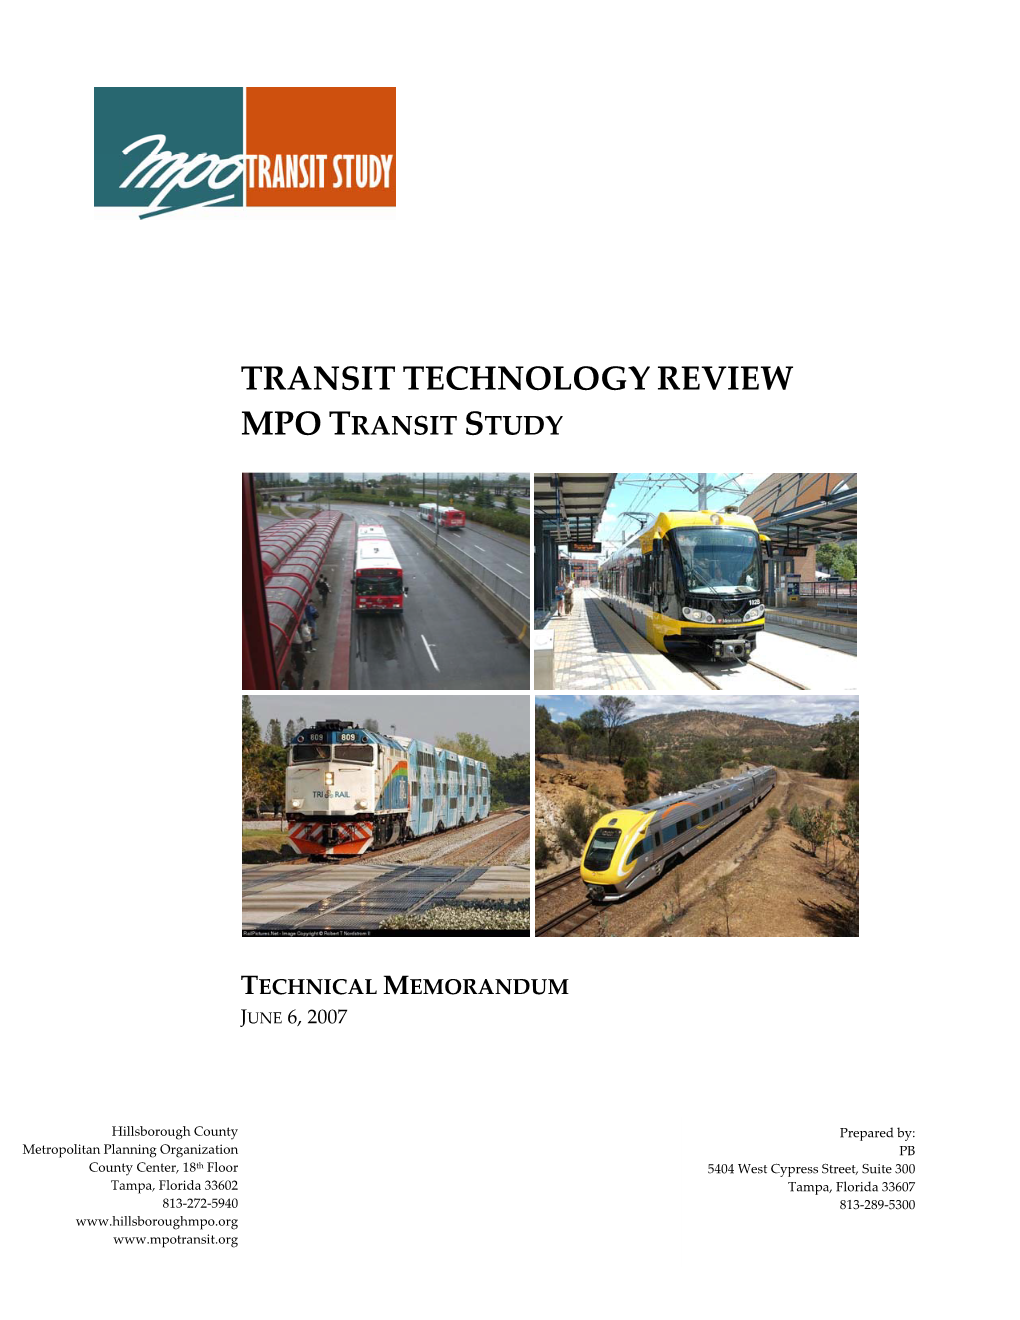 Transit Technology Review Mpo Transit Study